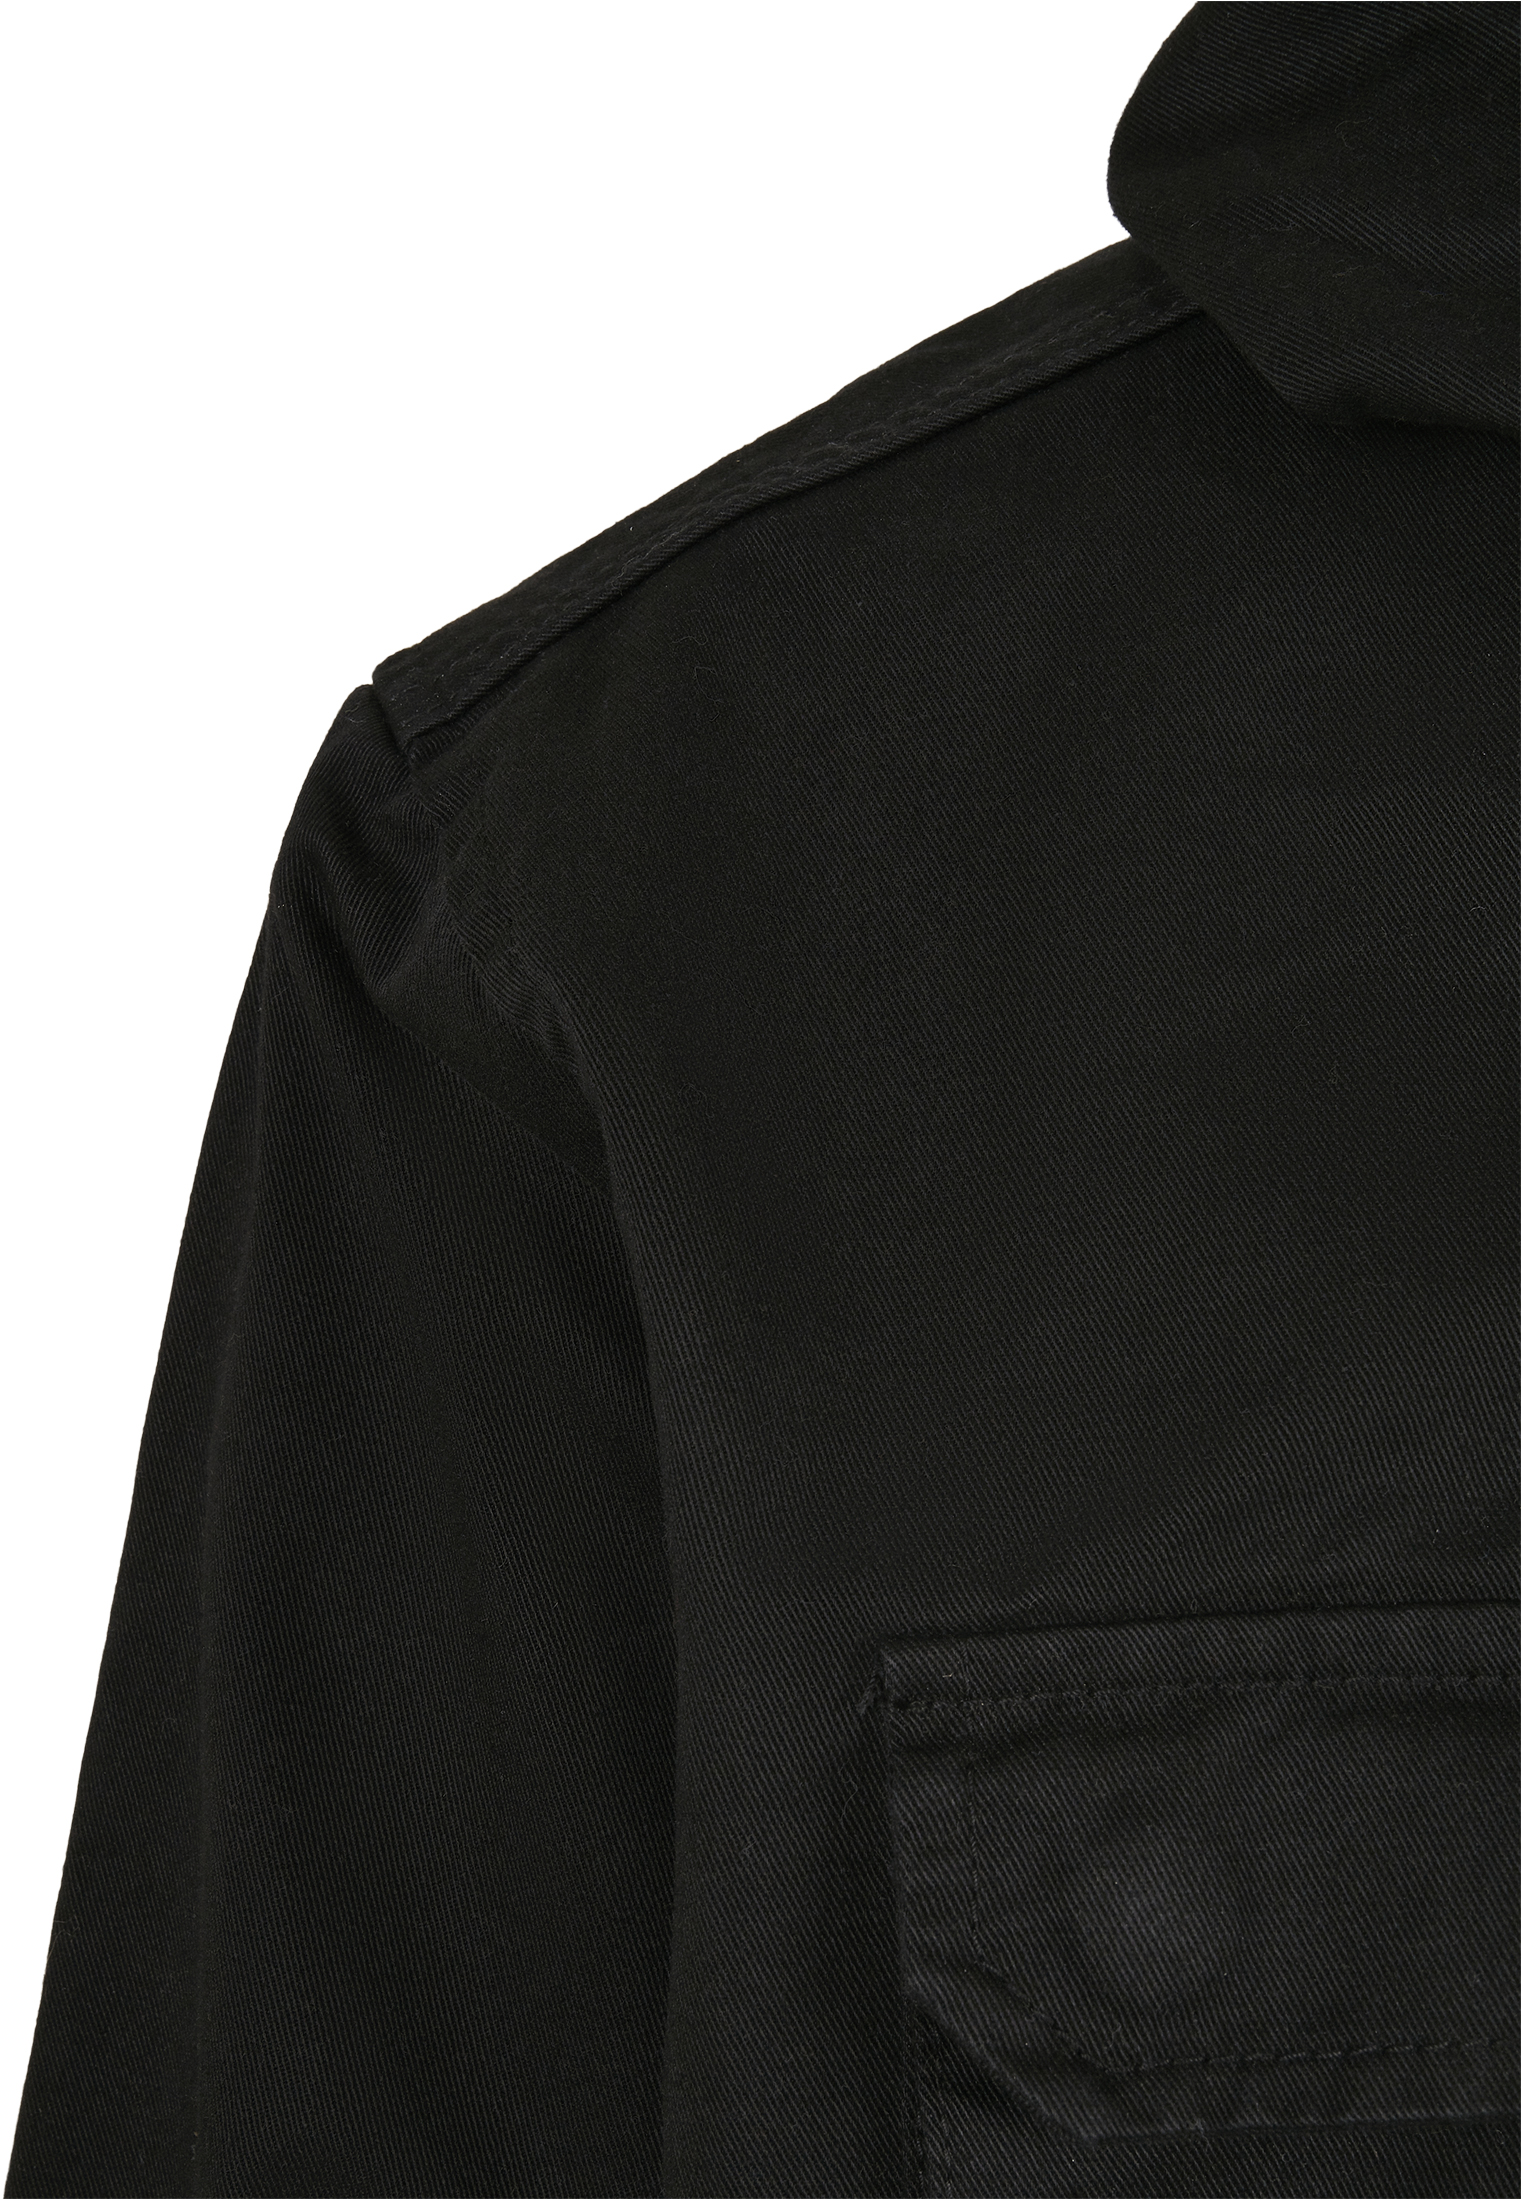 Light Jackets Cotton Field Jacket in Farbe black